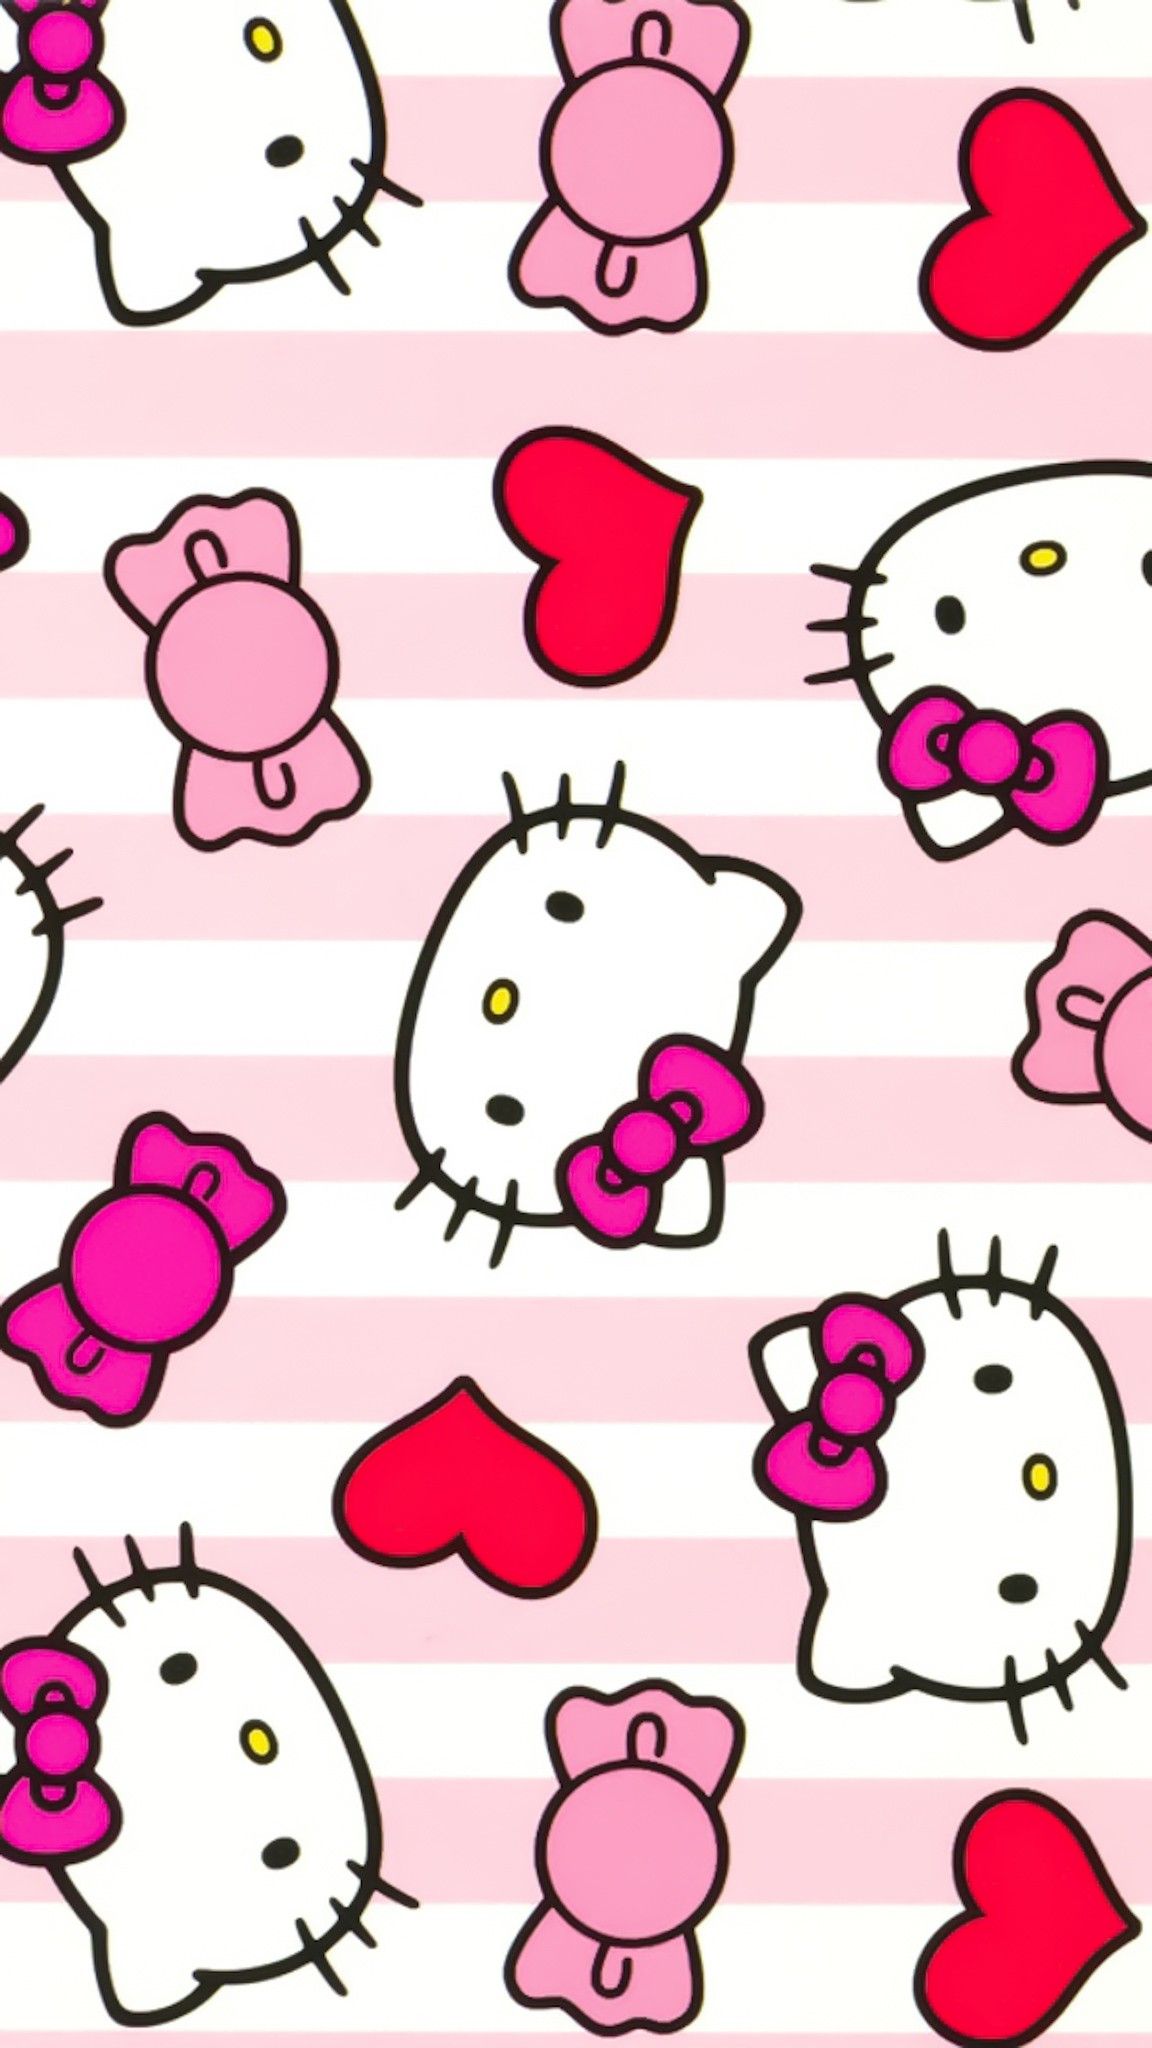 Hello Kitty WPP. Hello kitty wallpaper hd, Hello kitty background, Hello kitty picture